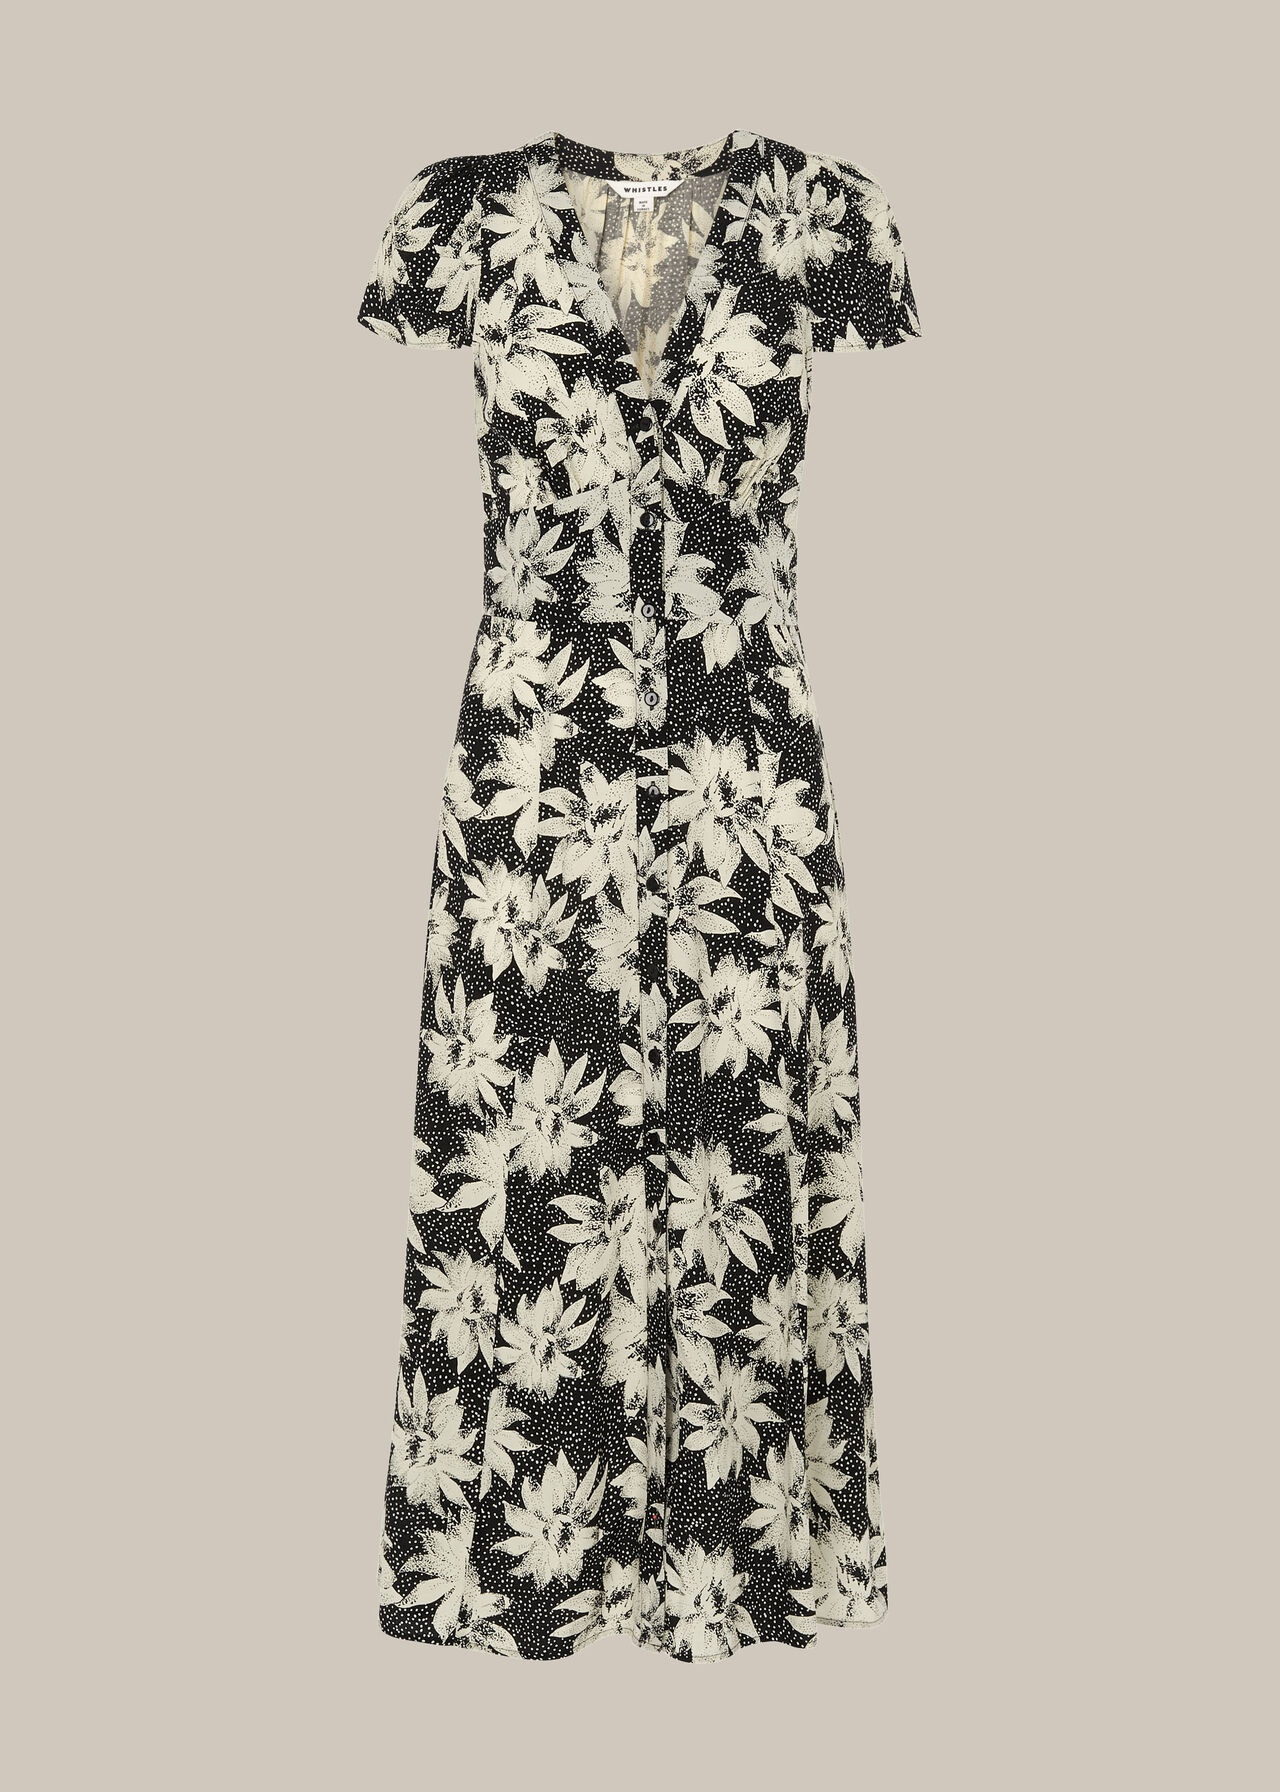 Starburst Floral Print Dress Black/Multi